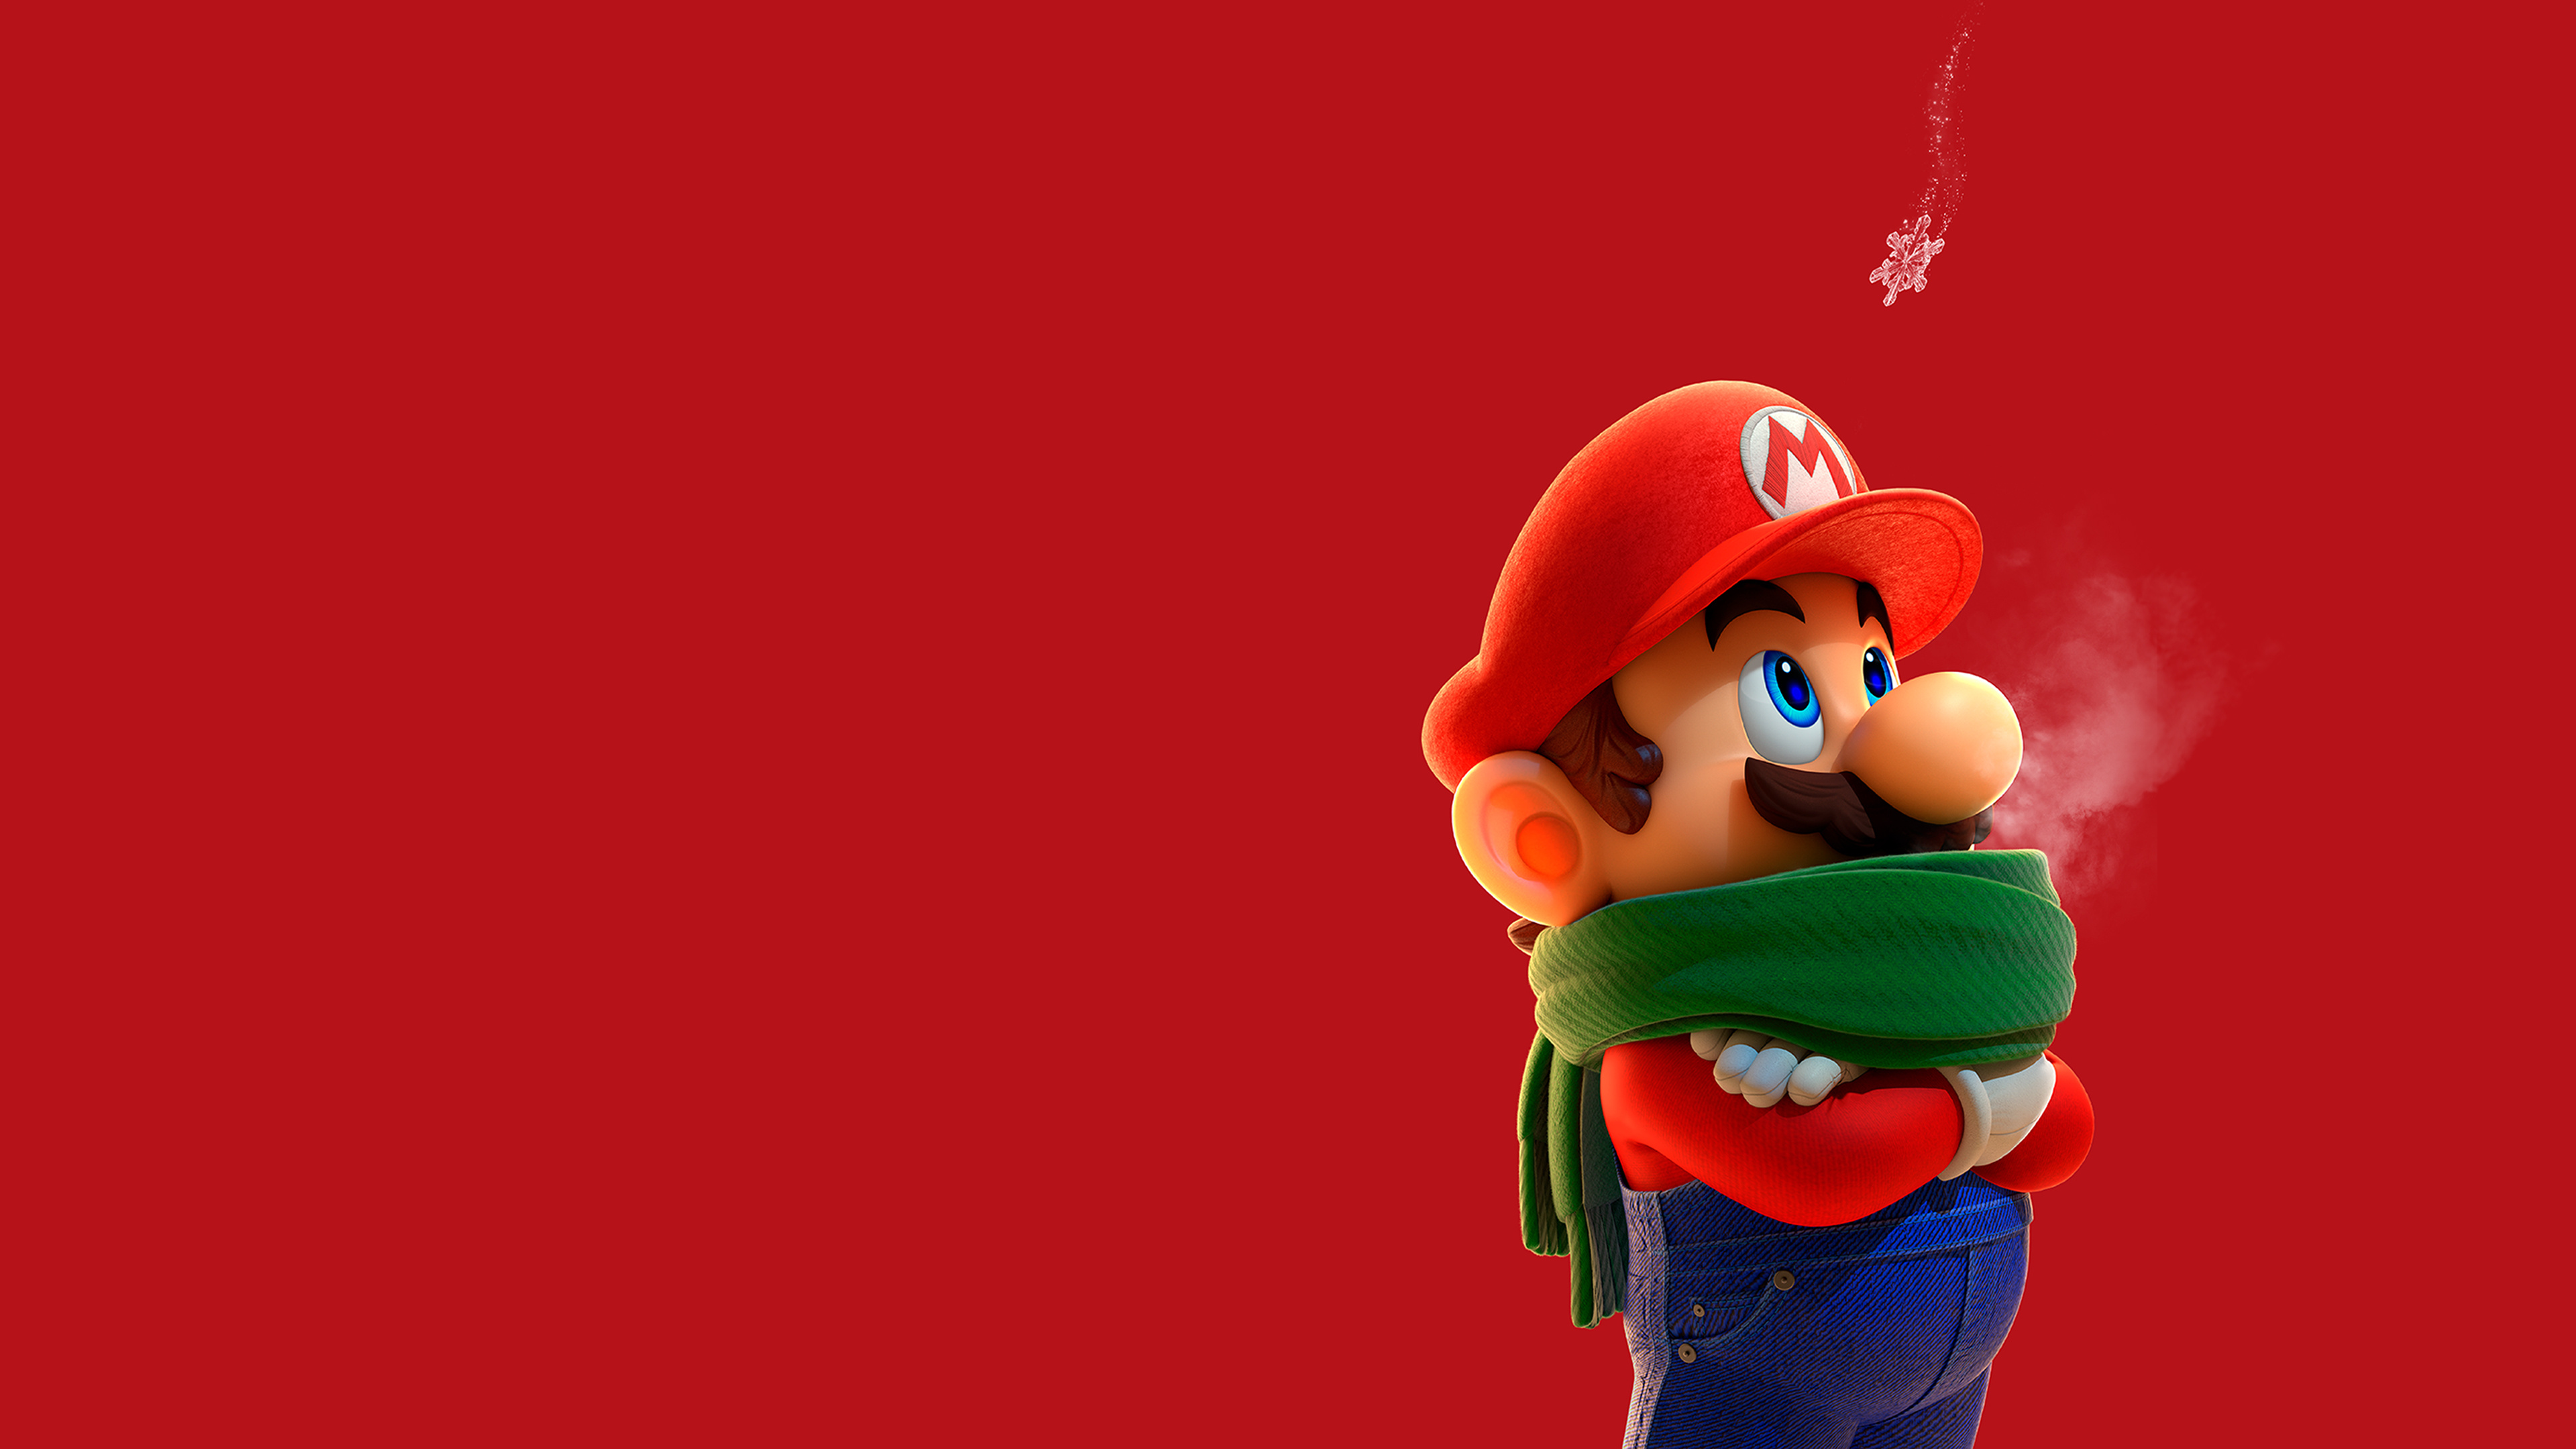 Super Mario scarf snowflakes, Nintendo wallpaper, Winter gaming, Festive vibes, 3840x2160 4K Desktop